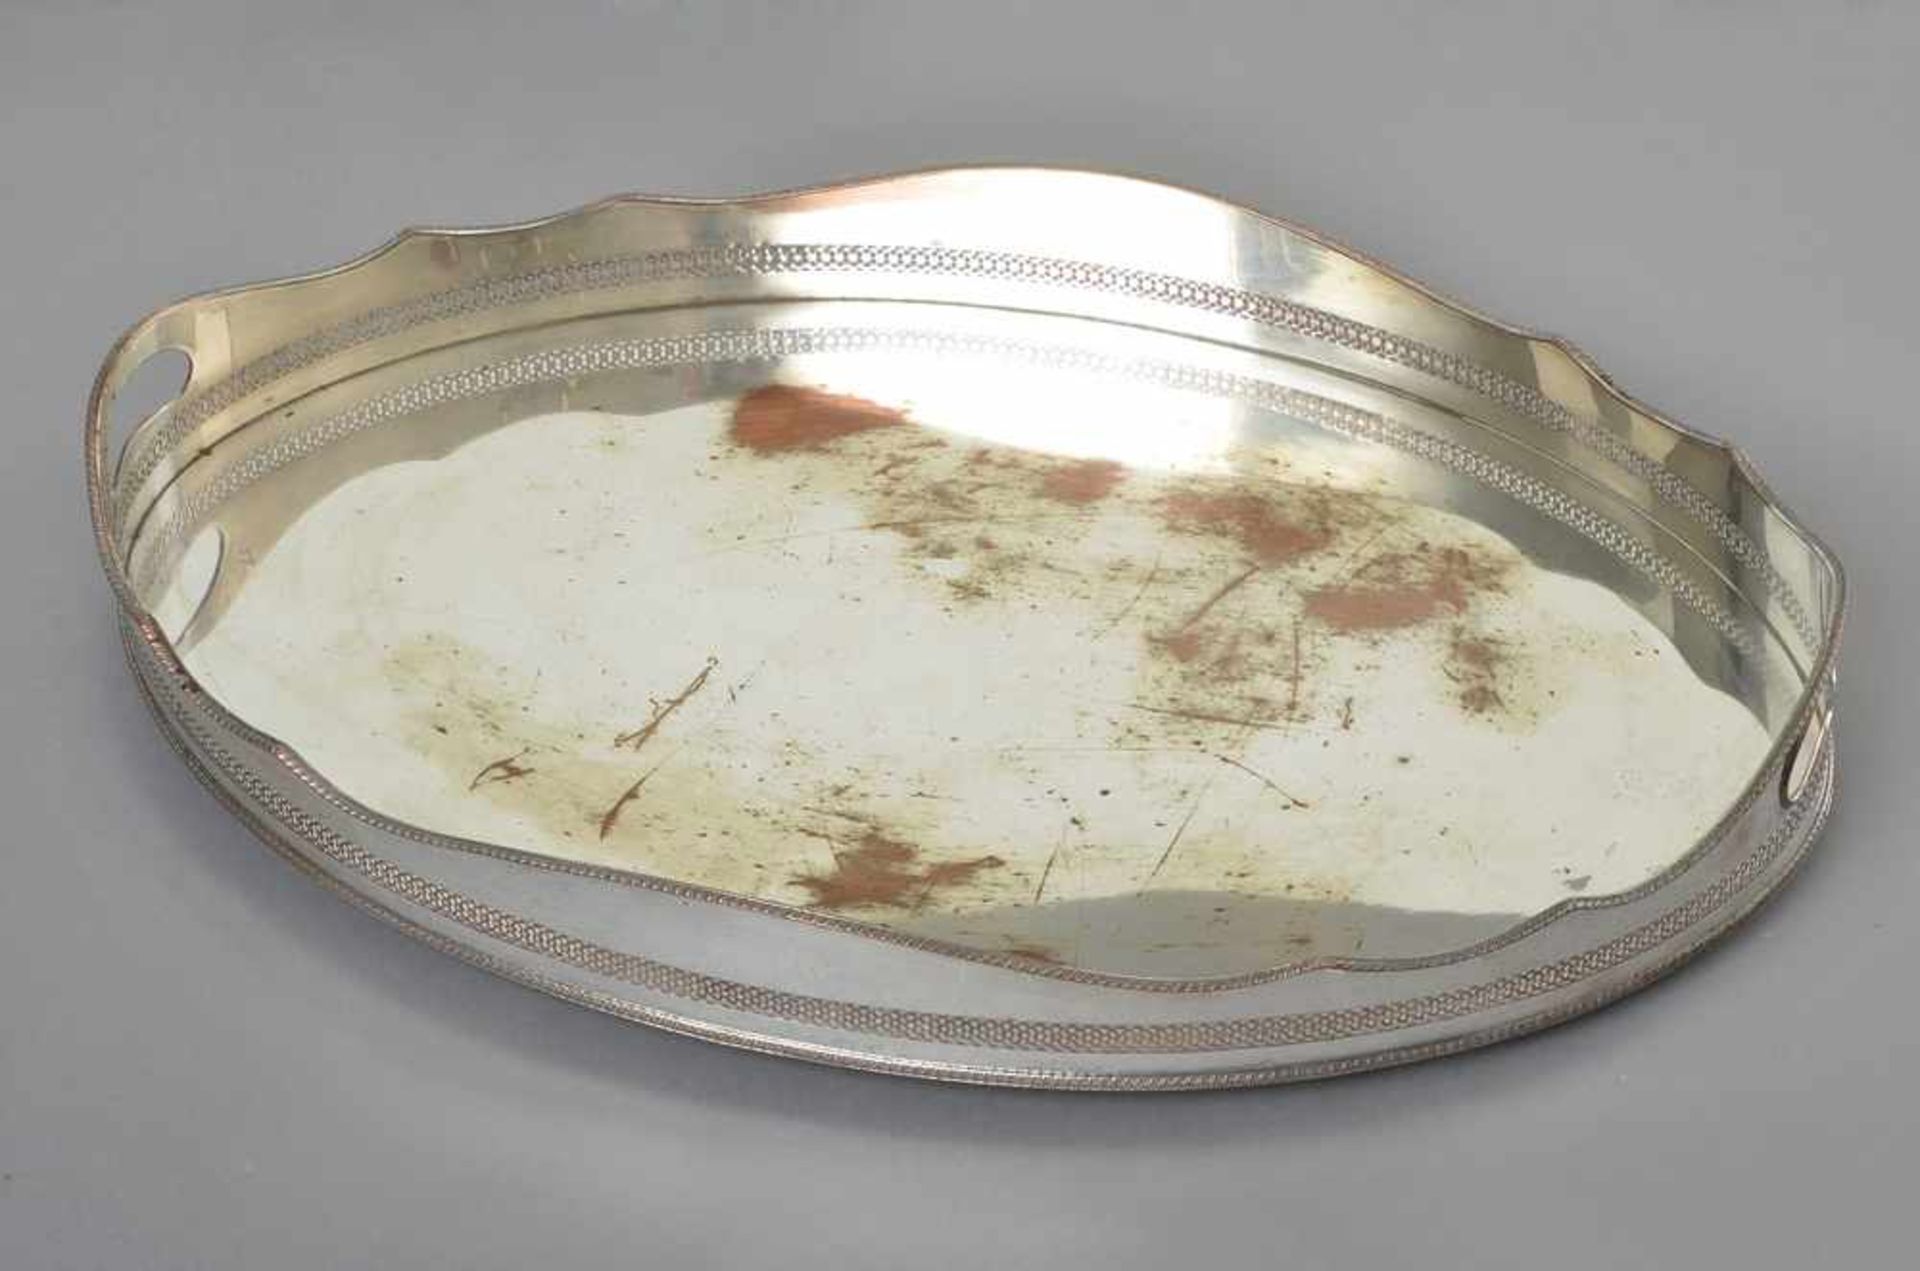 Ovales Tablett mit durchbrochenem Rand, Copper plated, England Ende 19.Jh., 61x41,5cm, berieben